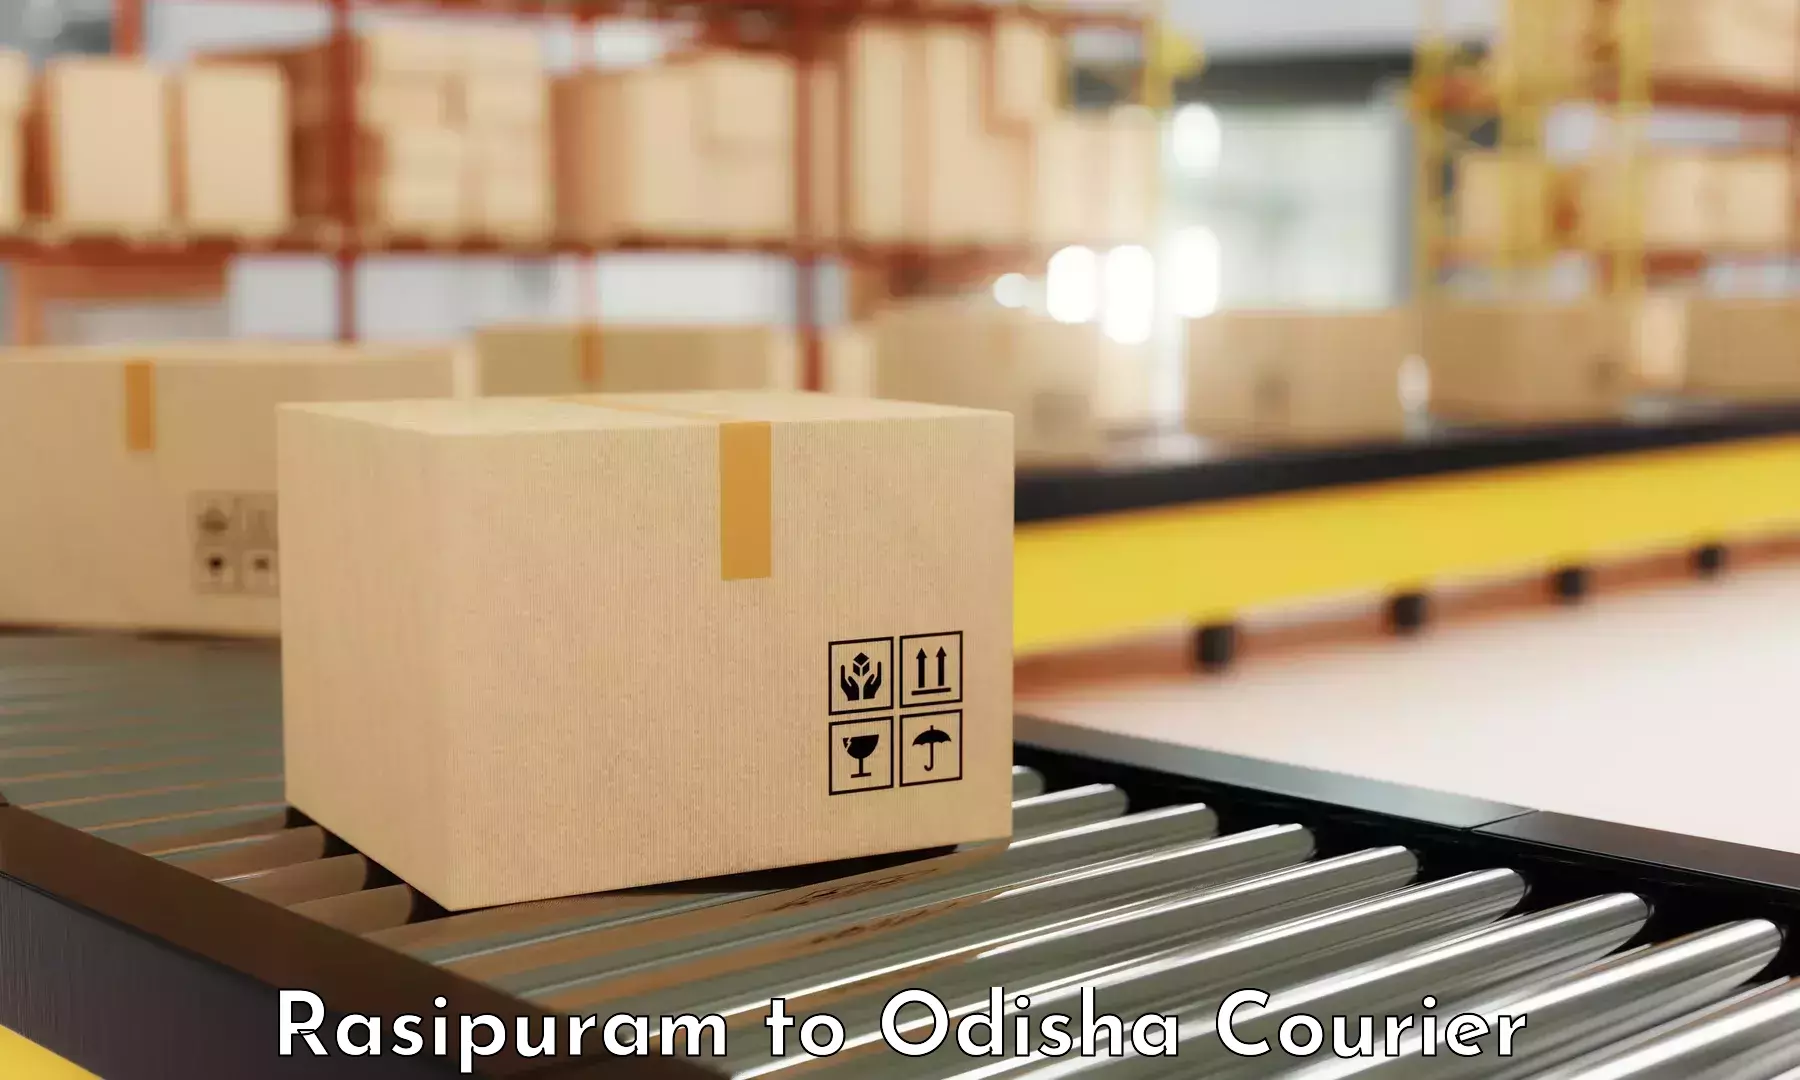 State-of-the-art courier technology Rasipuram to Patnagarh